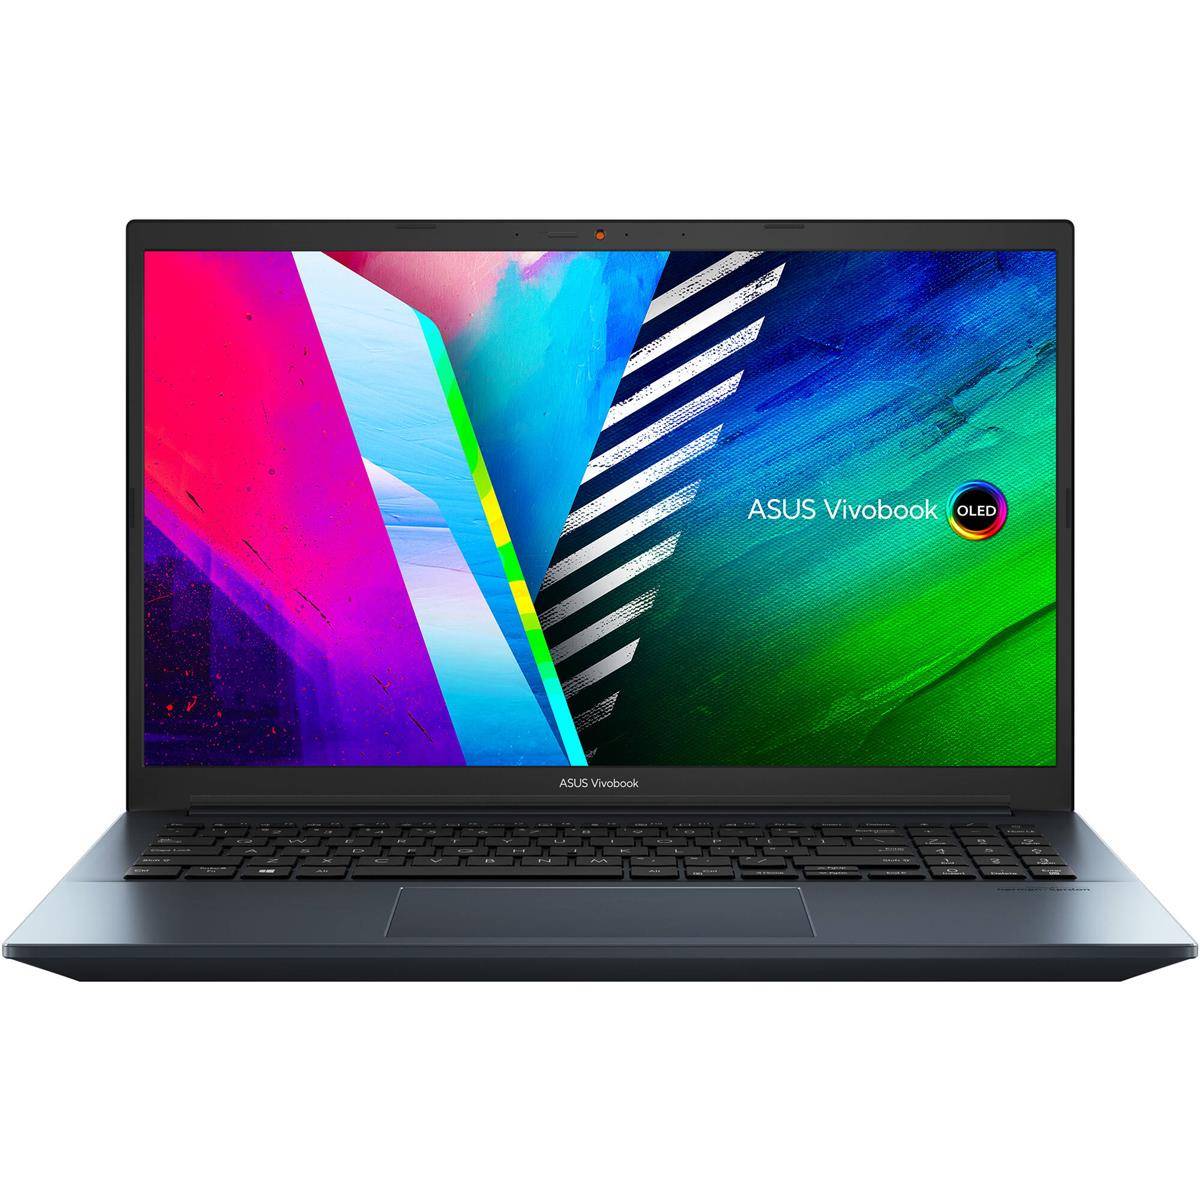 ASUS ZenBook 15 Ultra-Slim Laptop 15.6” FHD NanoEdge Bezel, Intel Core  i7-10510U, 16GB RAM, 512GB PCIe SSD, GeForce GTX 1650, Innovative ScreenPad